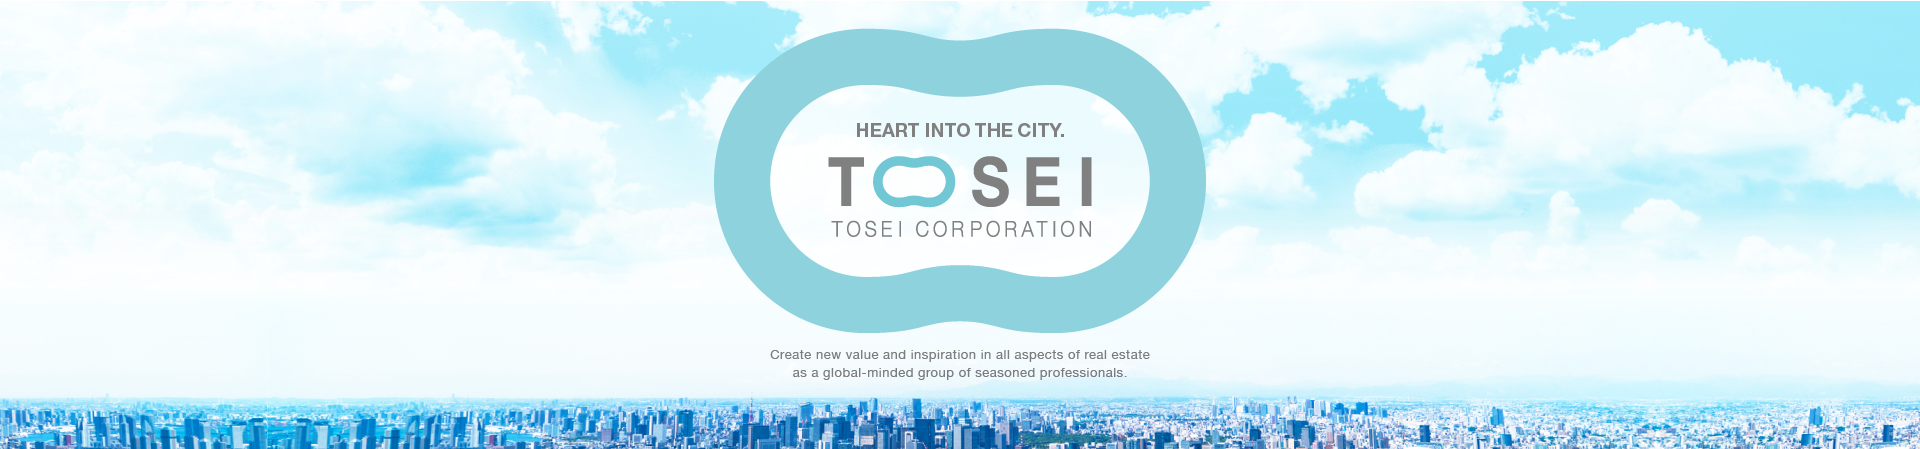 HEART INFO THE CITY　TOSEI TOSEI CORPORATION